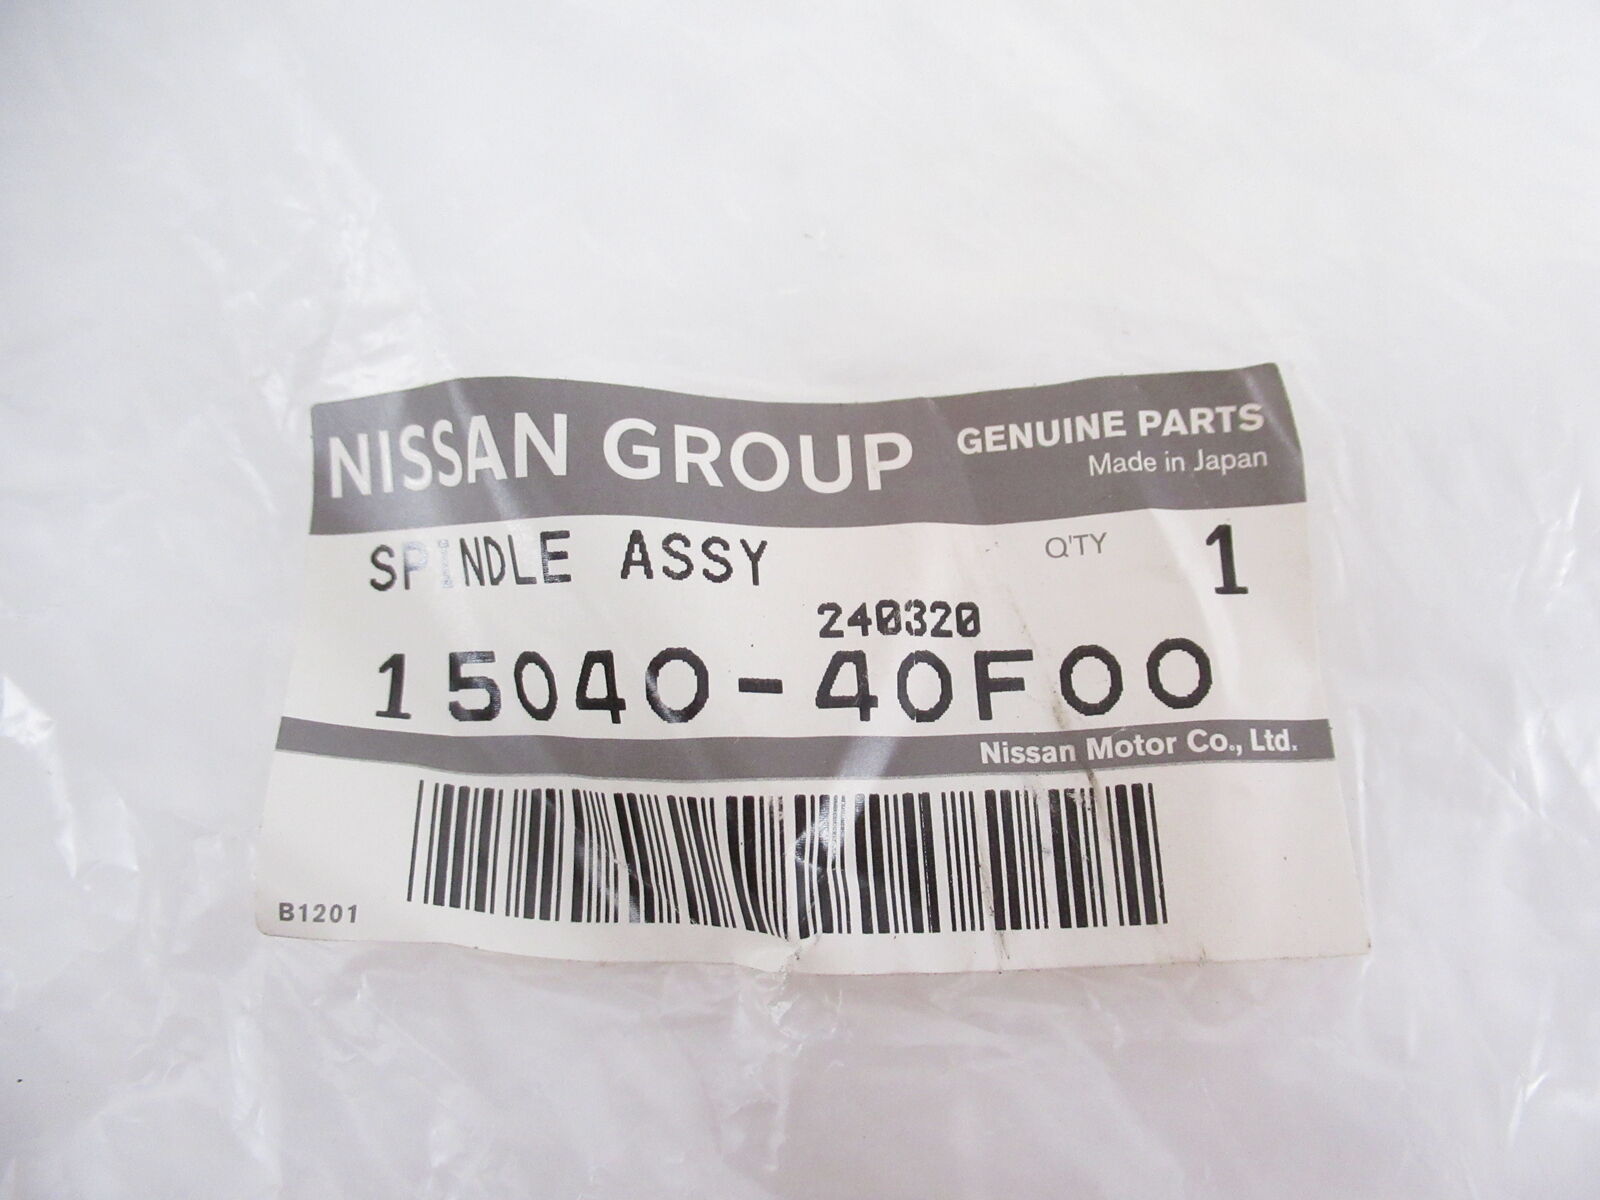 Genuine OEM Nissan 15040-40F00 Oil Pump Drive Spindle Assy 